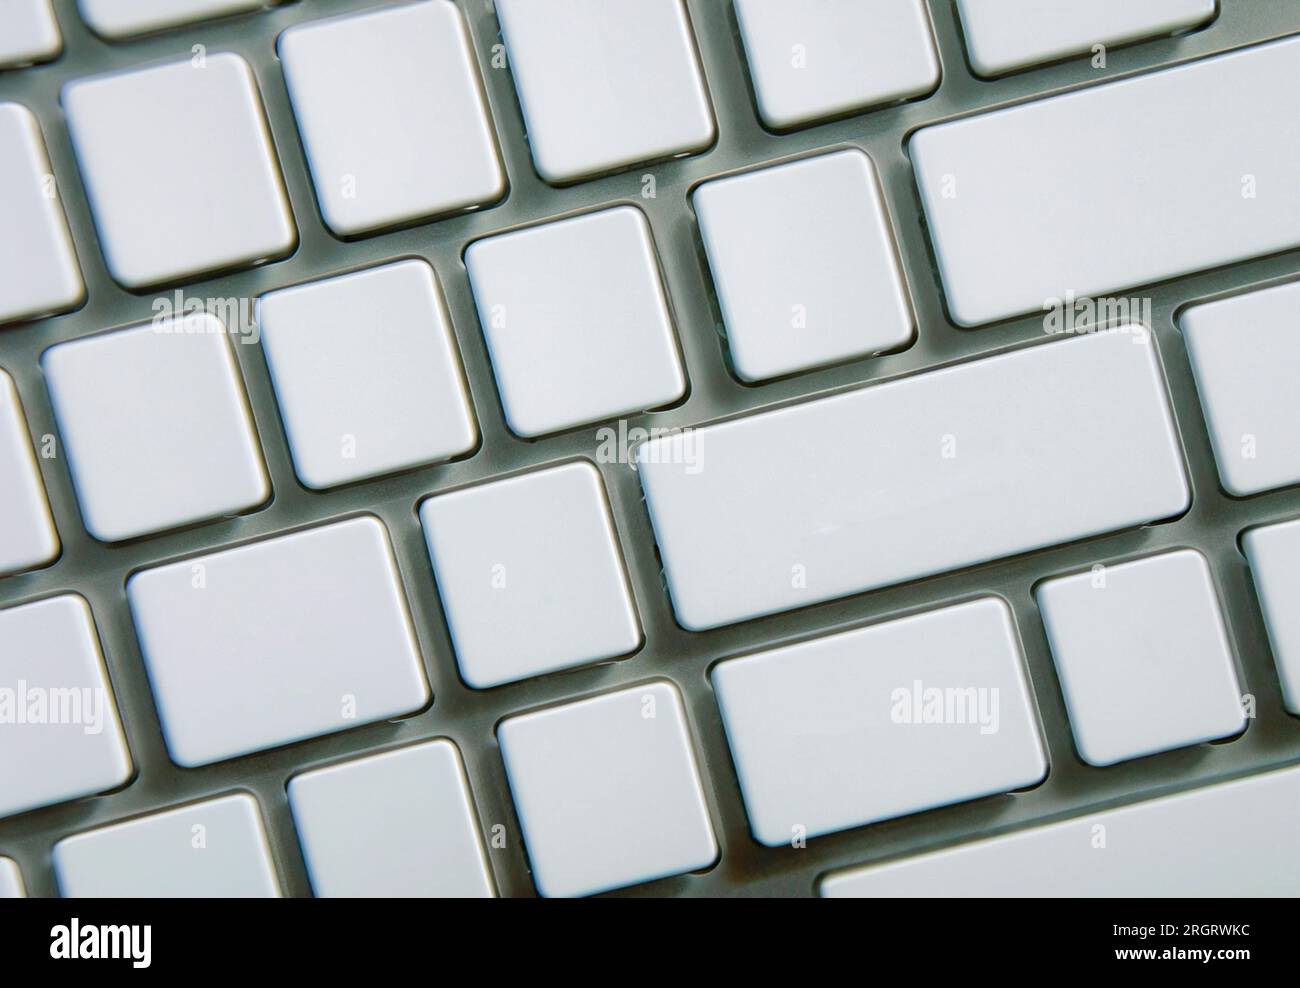 Tastatur ohne Text und Symbole. Stockfoto